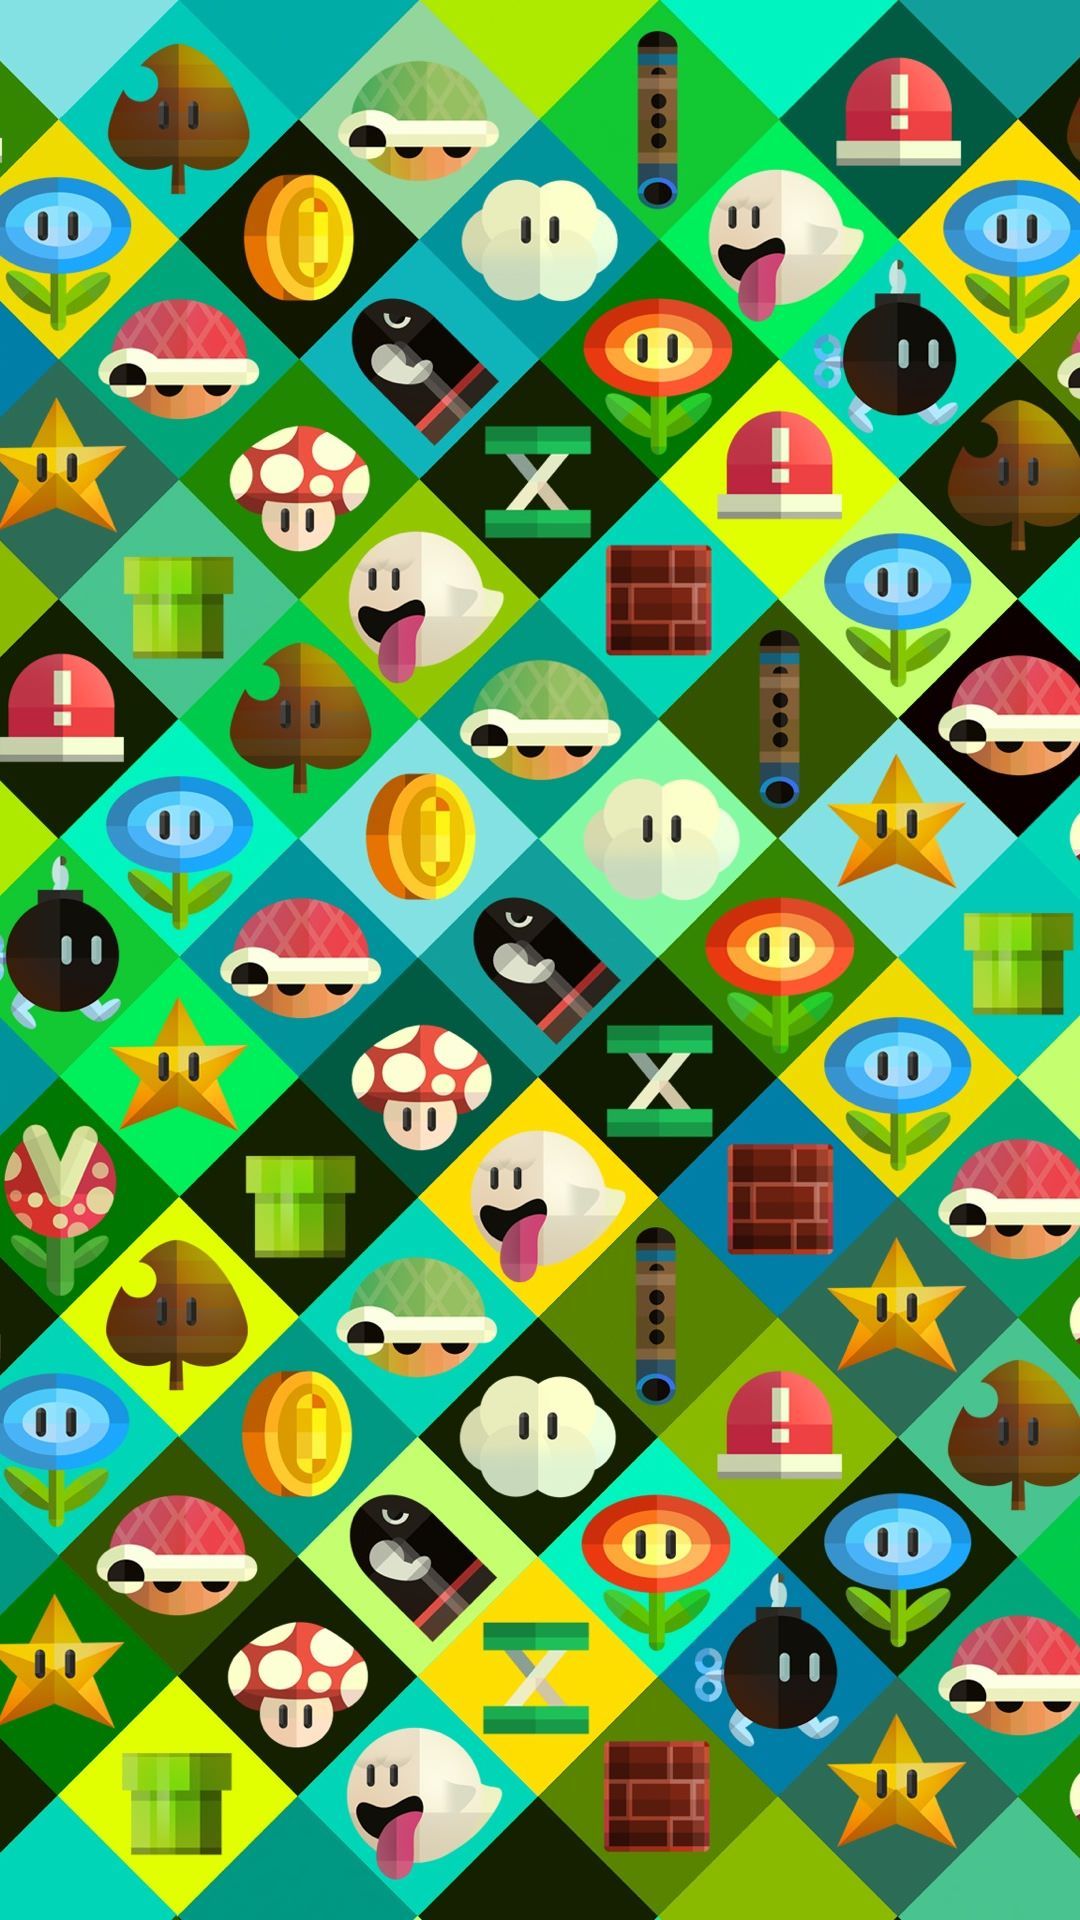 iPhone wallpaper Super Mario characters. iPhone Wallpaper. Game wallpaper iphone, Nerdy wallpaper, Super mario art